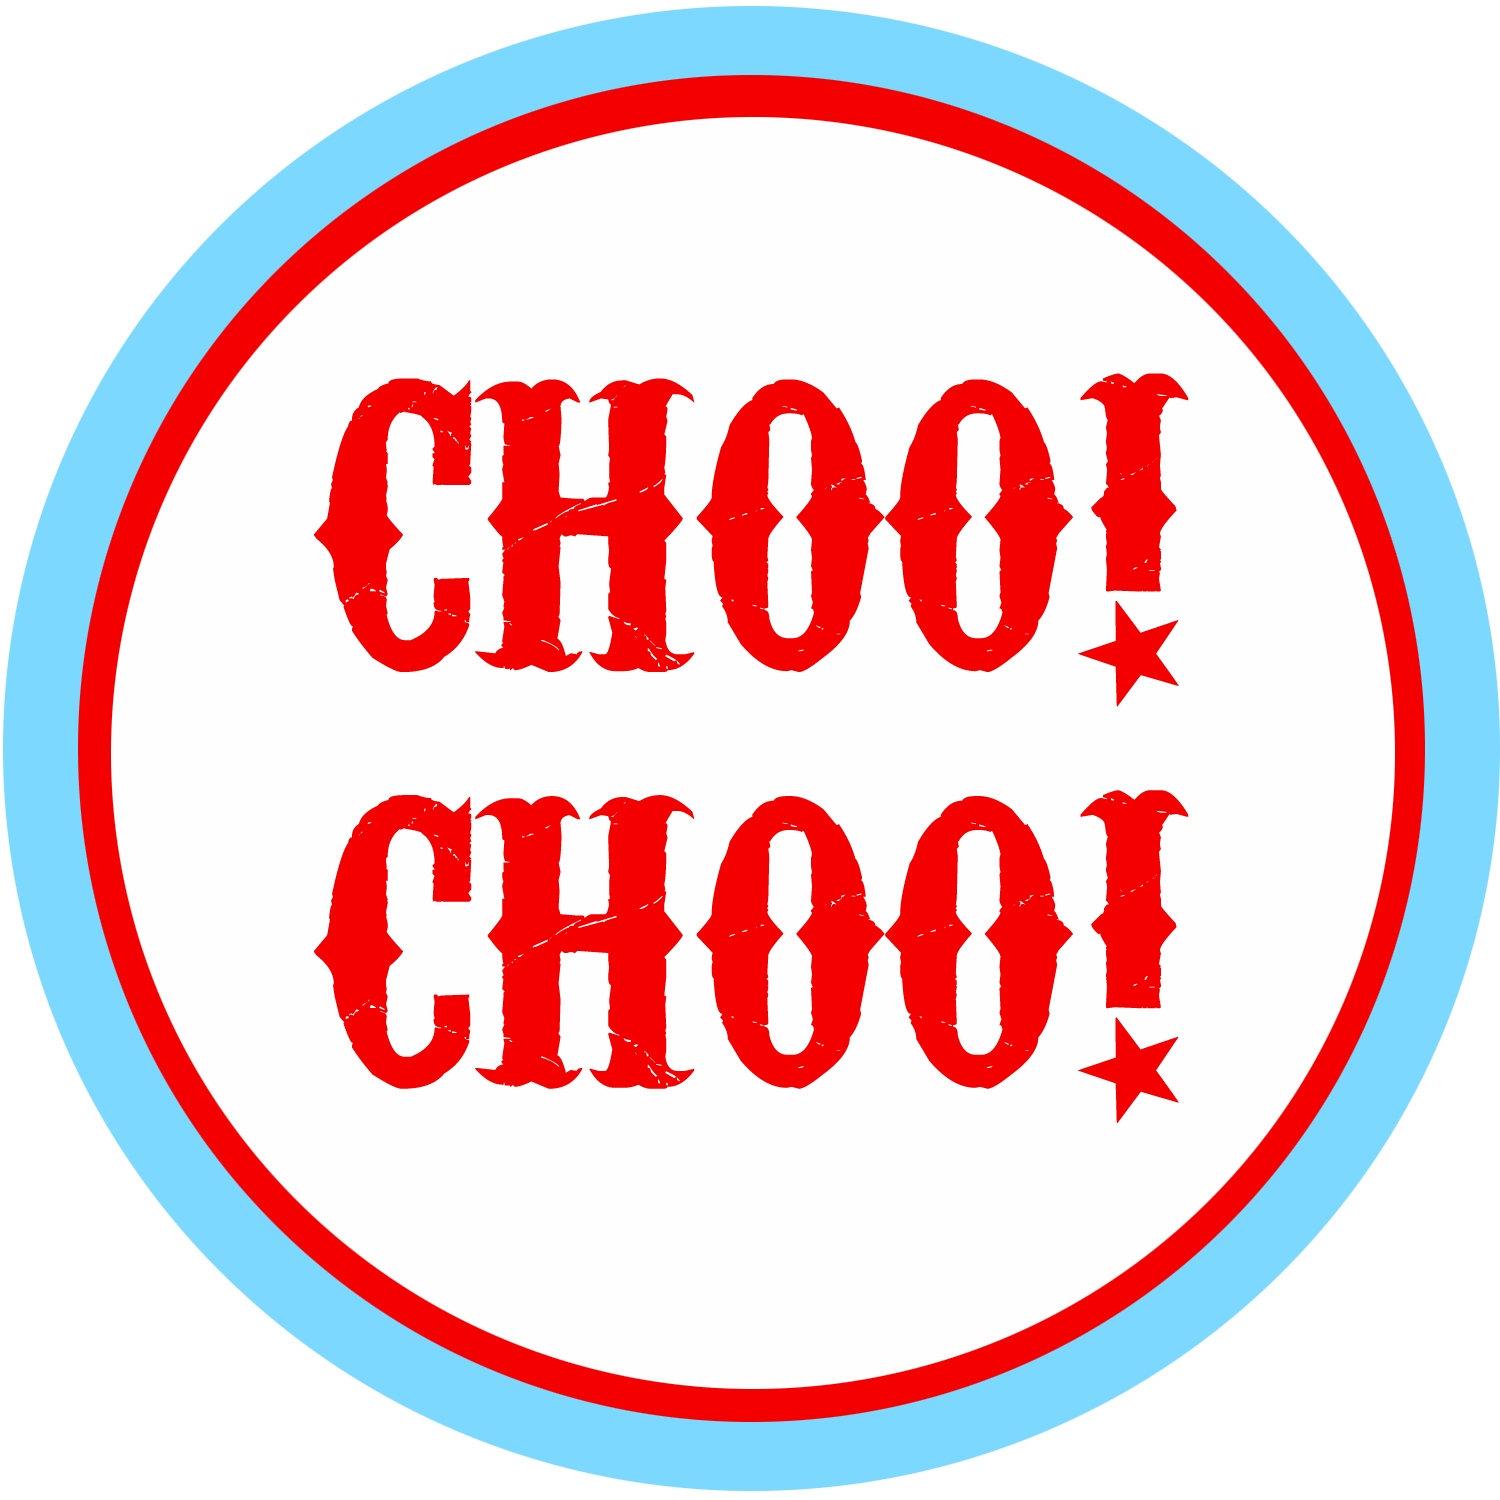 Choo Choo Train Clipart | Clipart Panda - Free Clipart Images